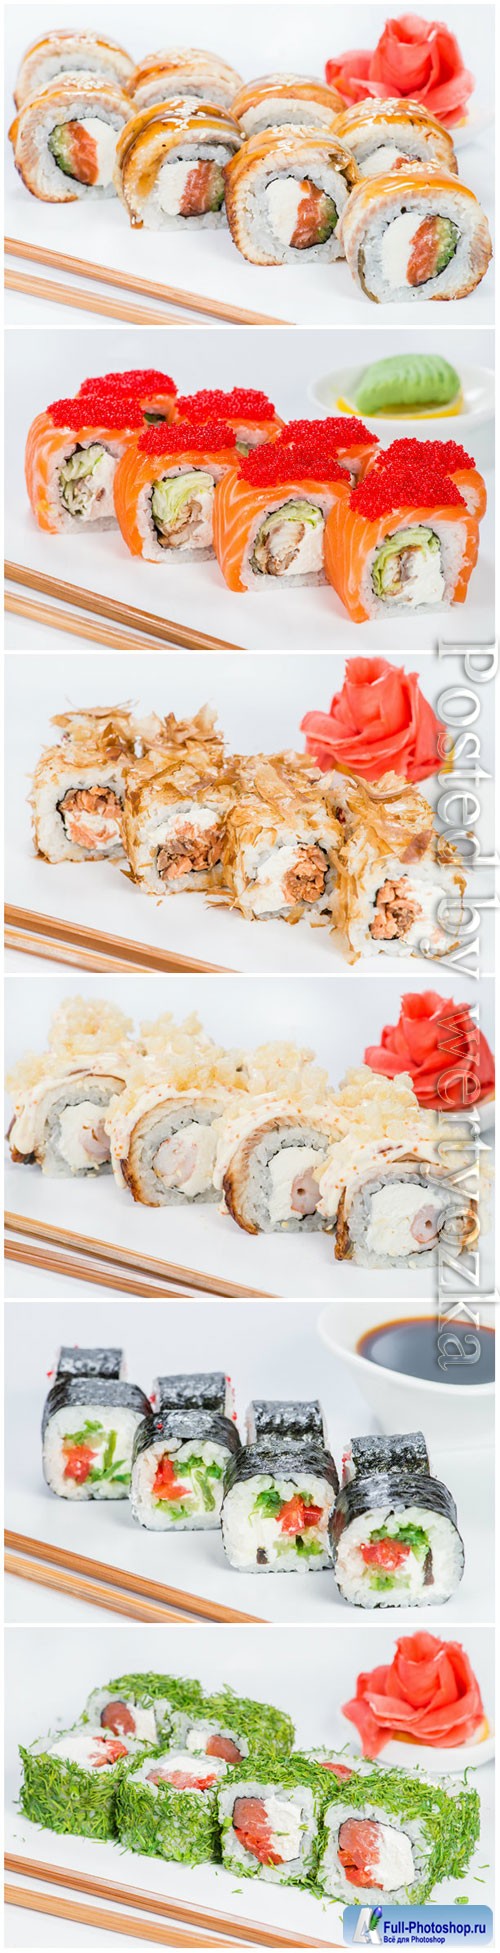 Tasty Japanese cuisine sushi rolls